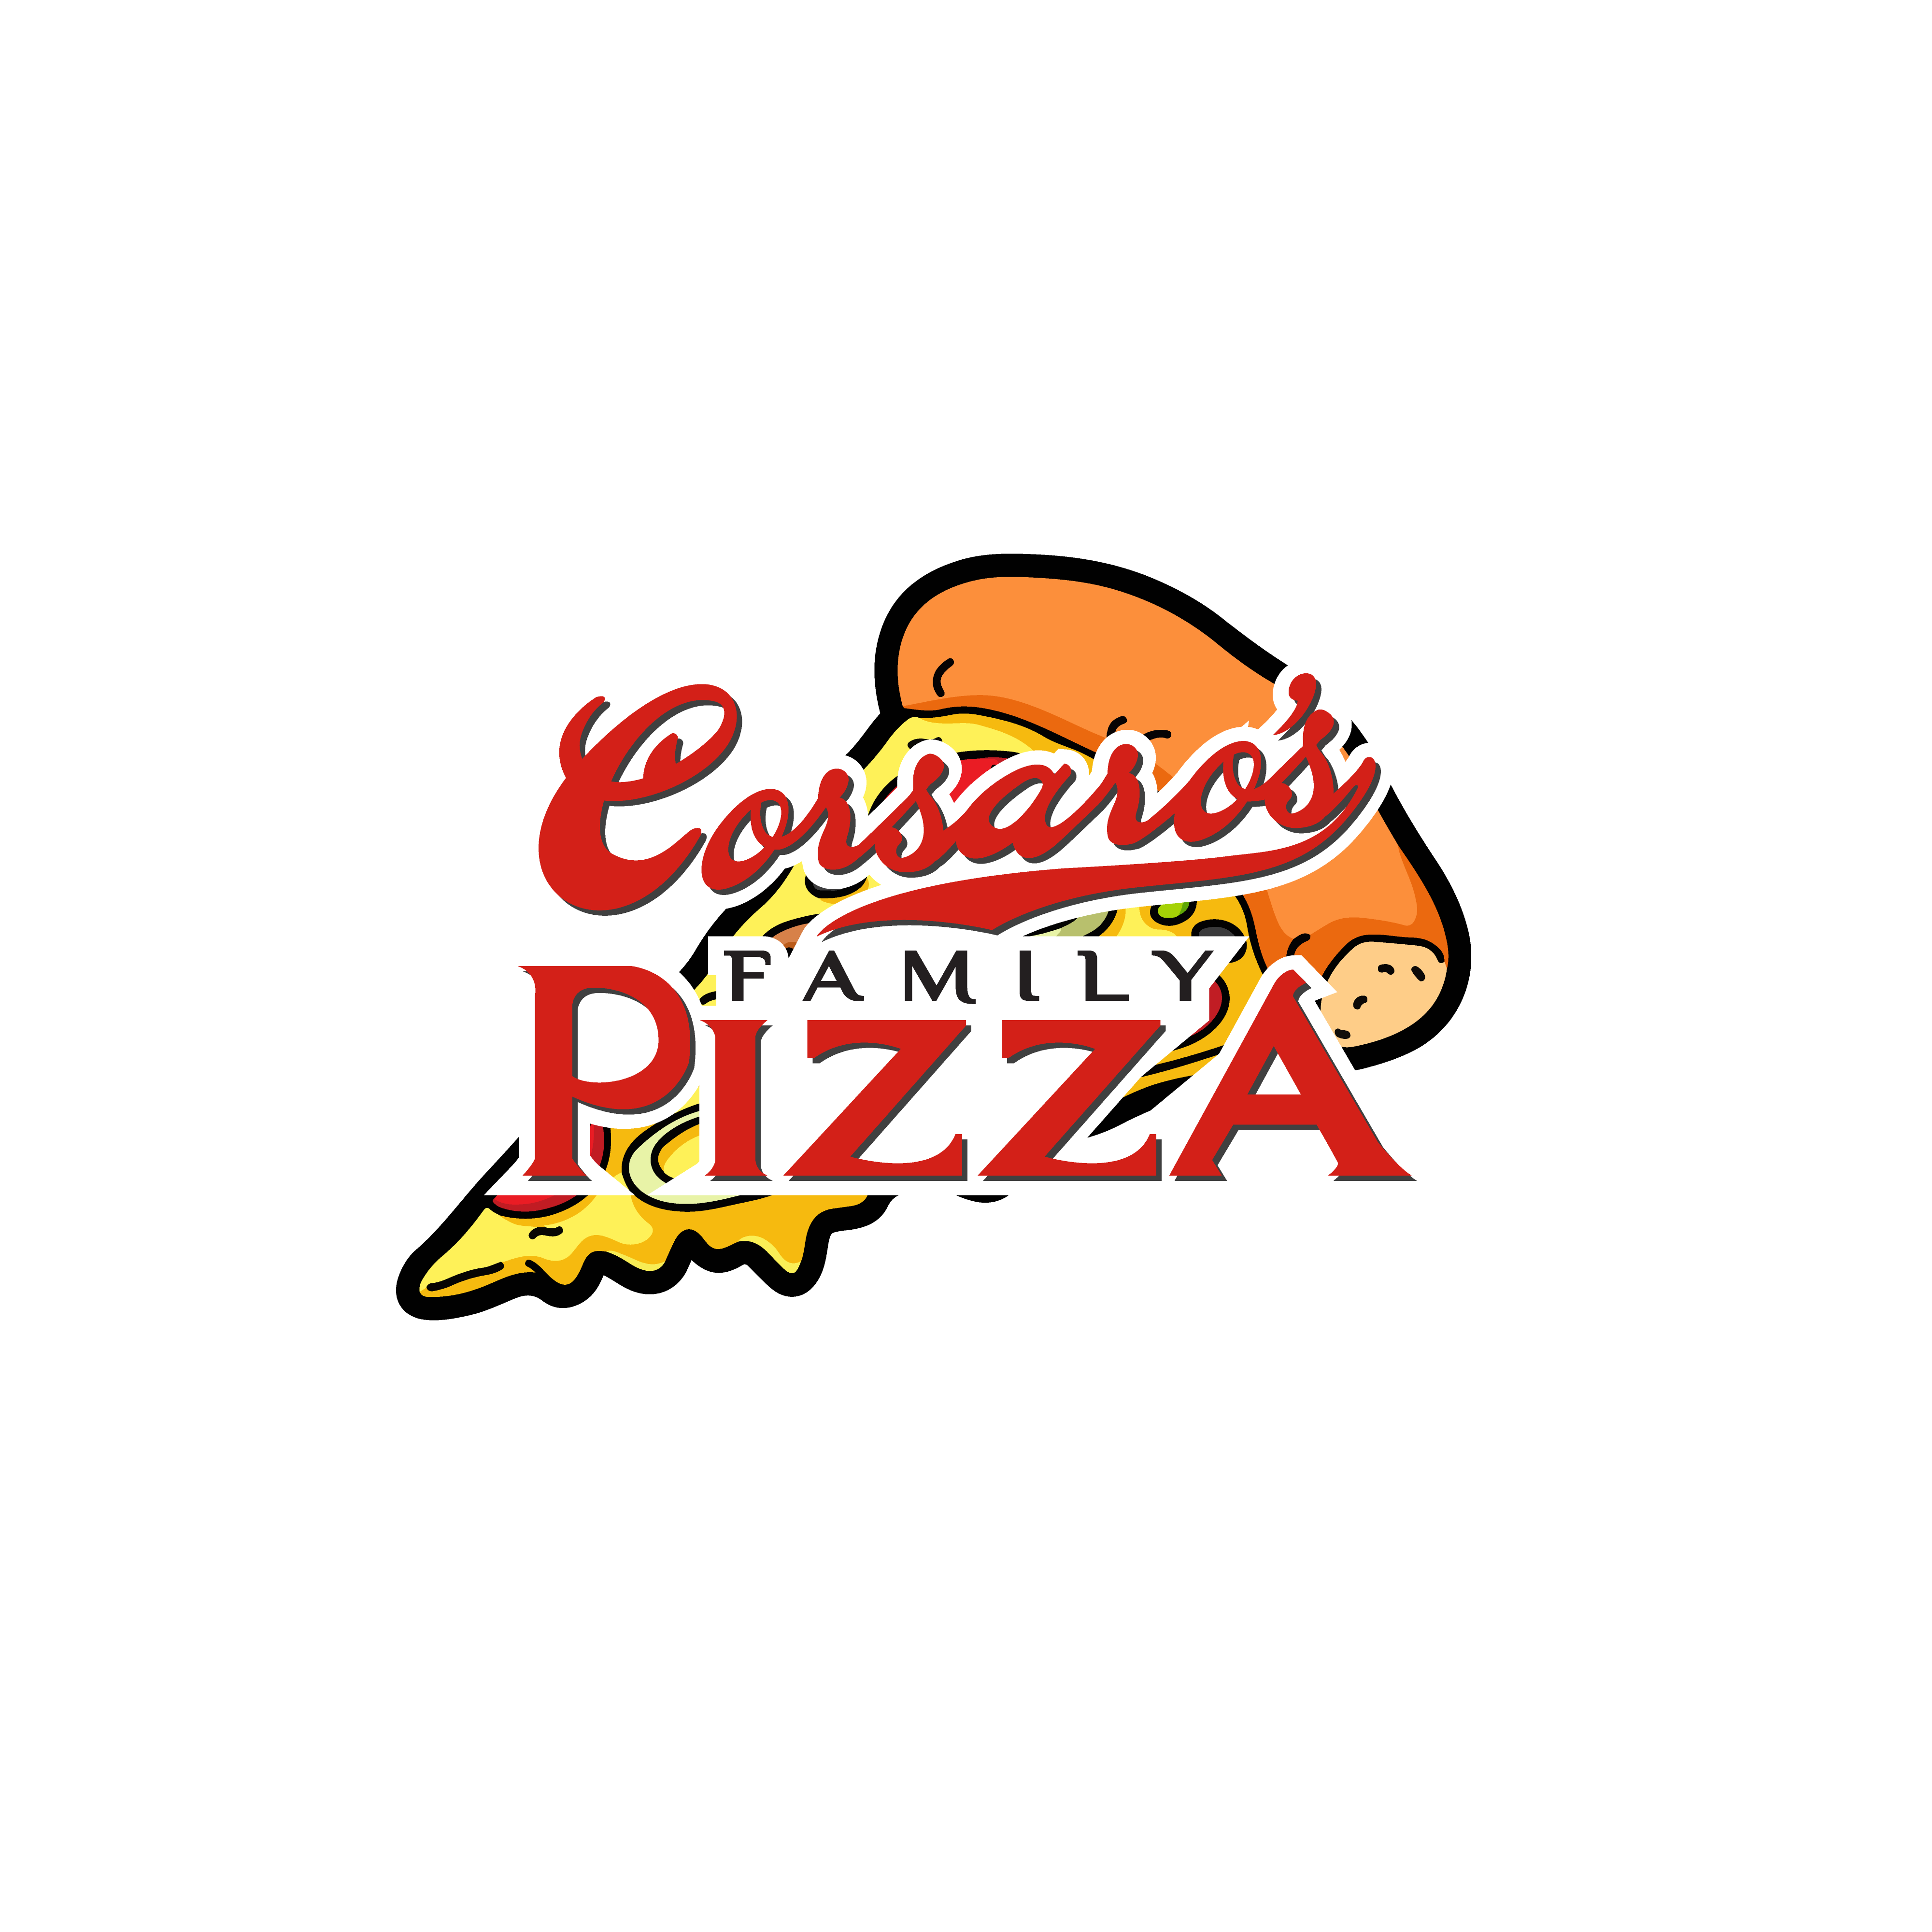 Corsaro's Family Pizza